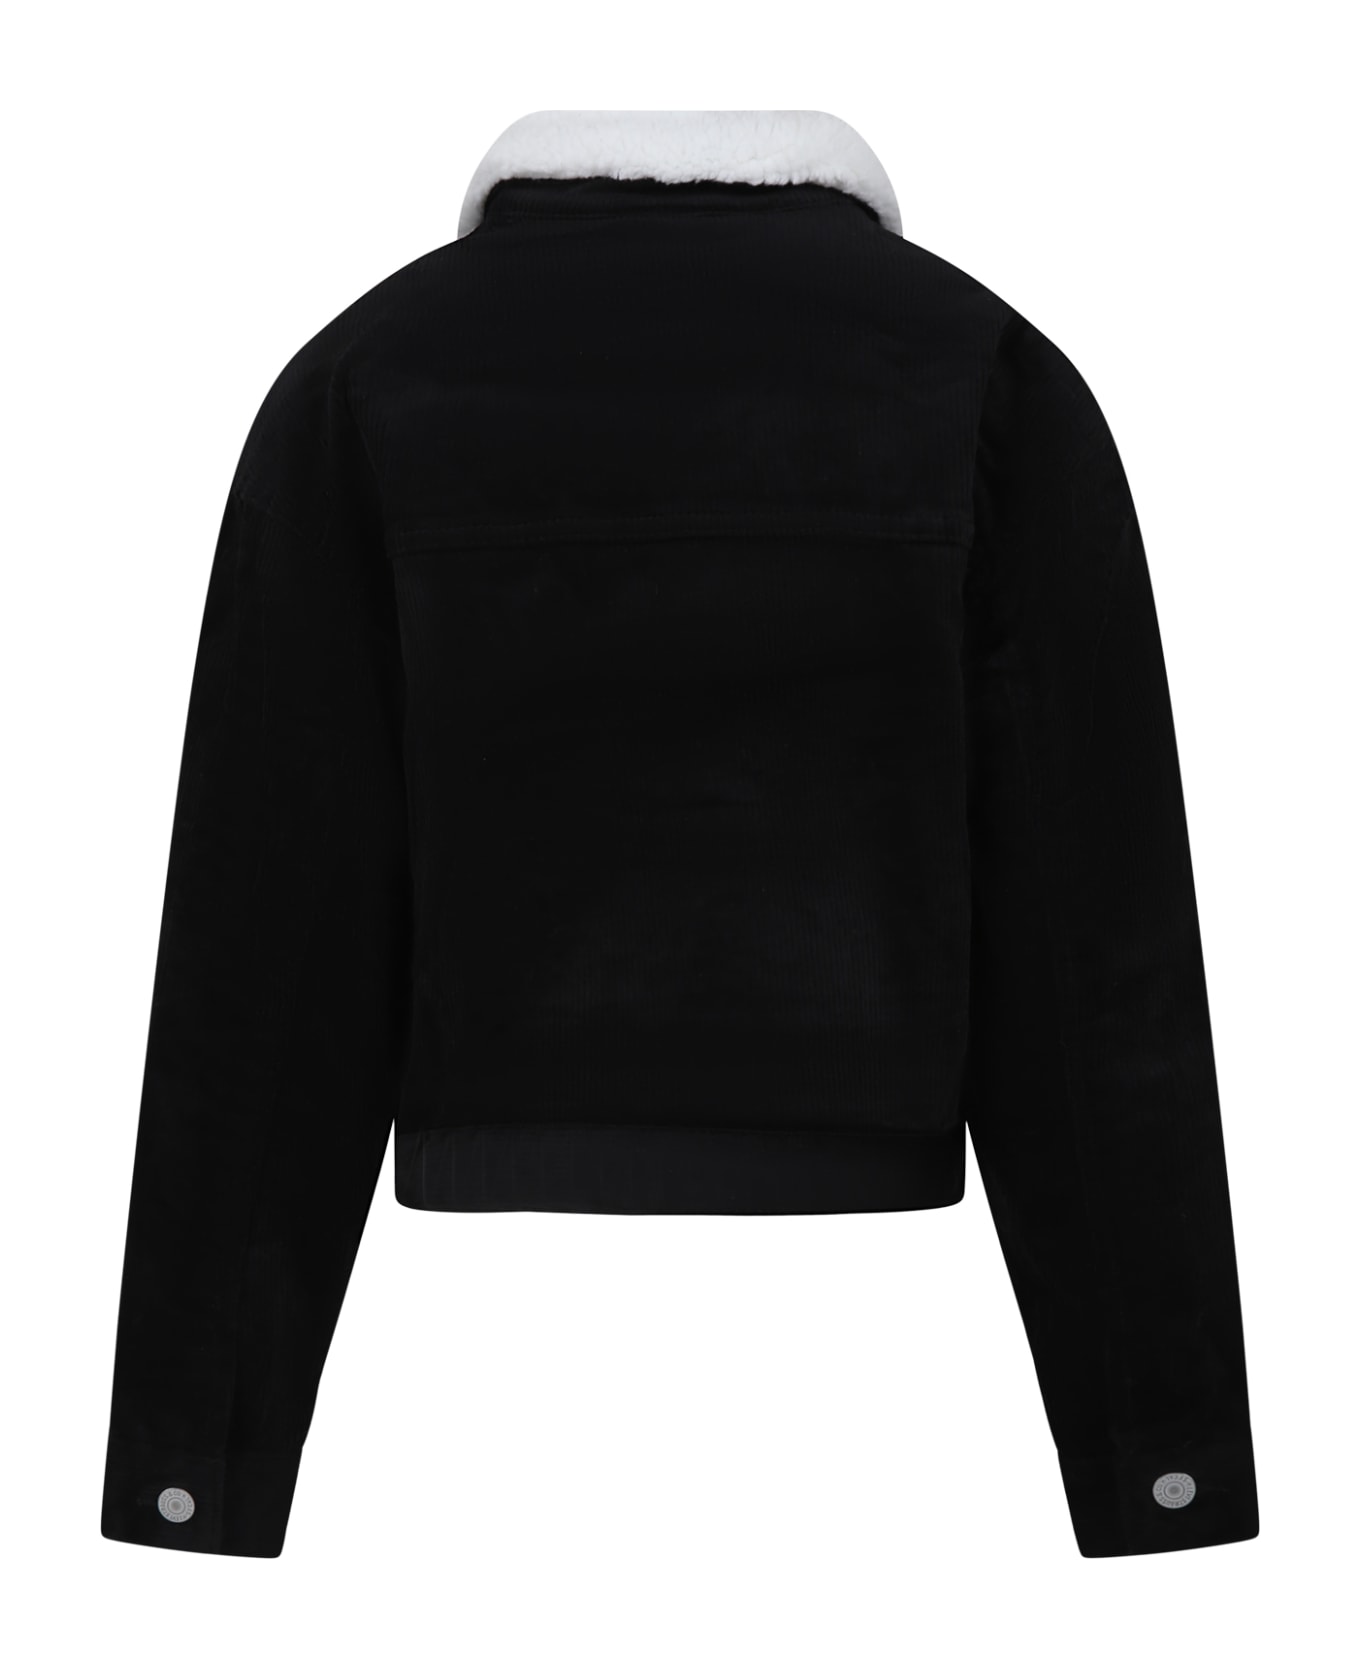 Levi's Black Jacket For Girl With Logo - Black